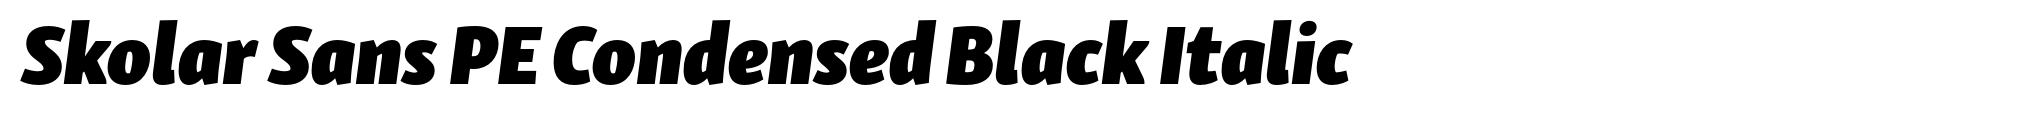 Skolar Sans PE Condensed Black Italic image